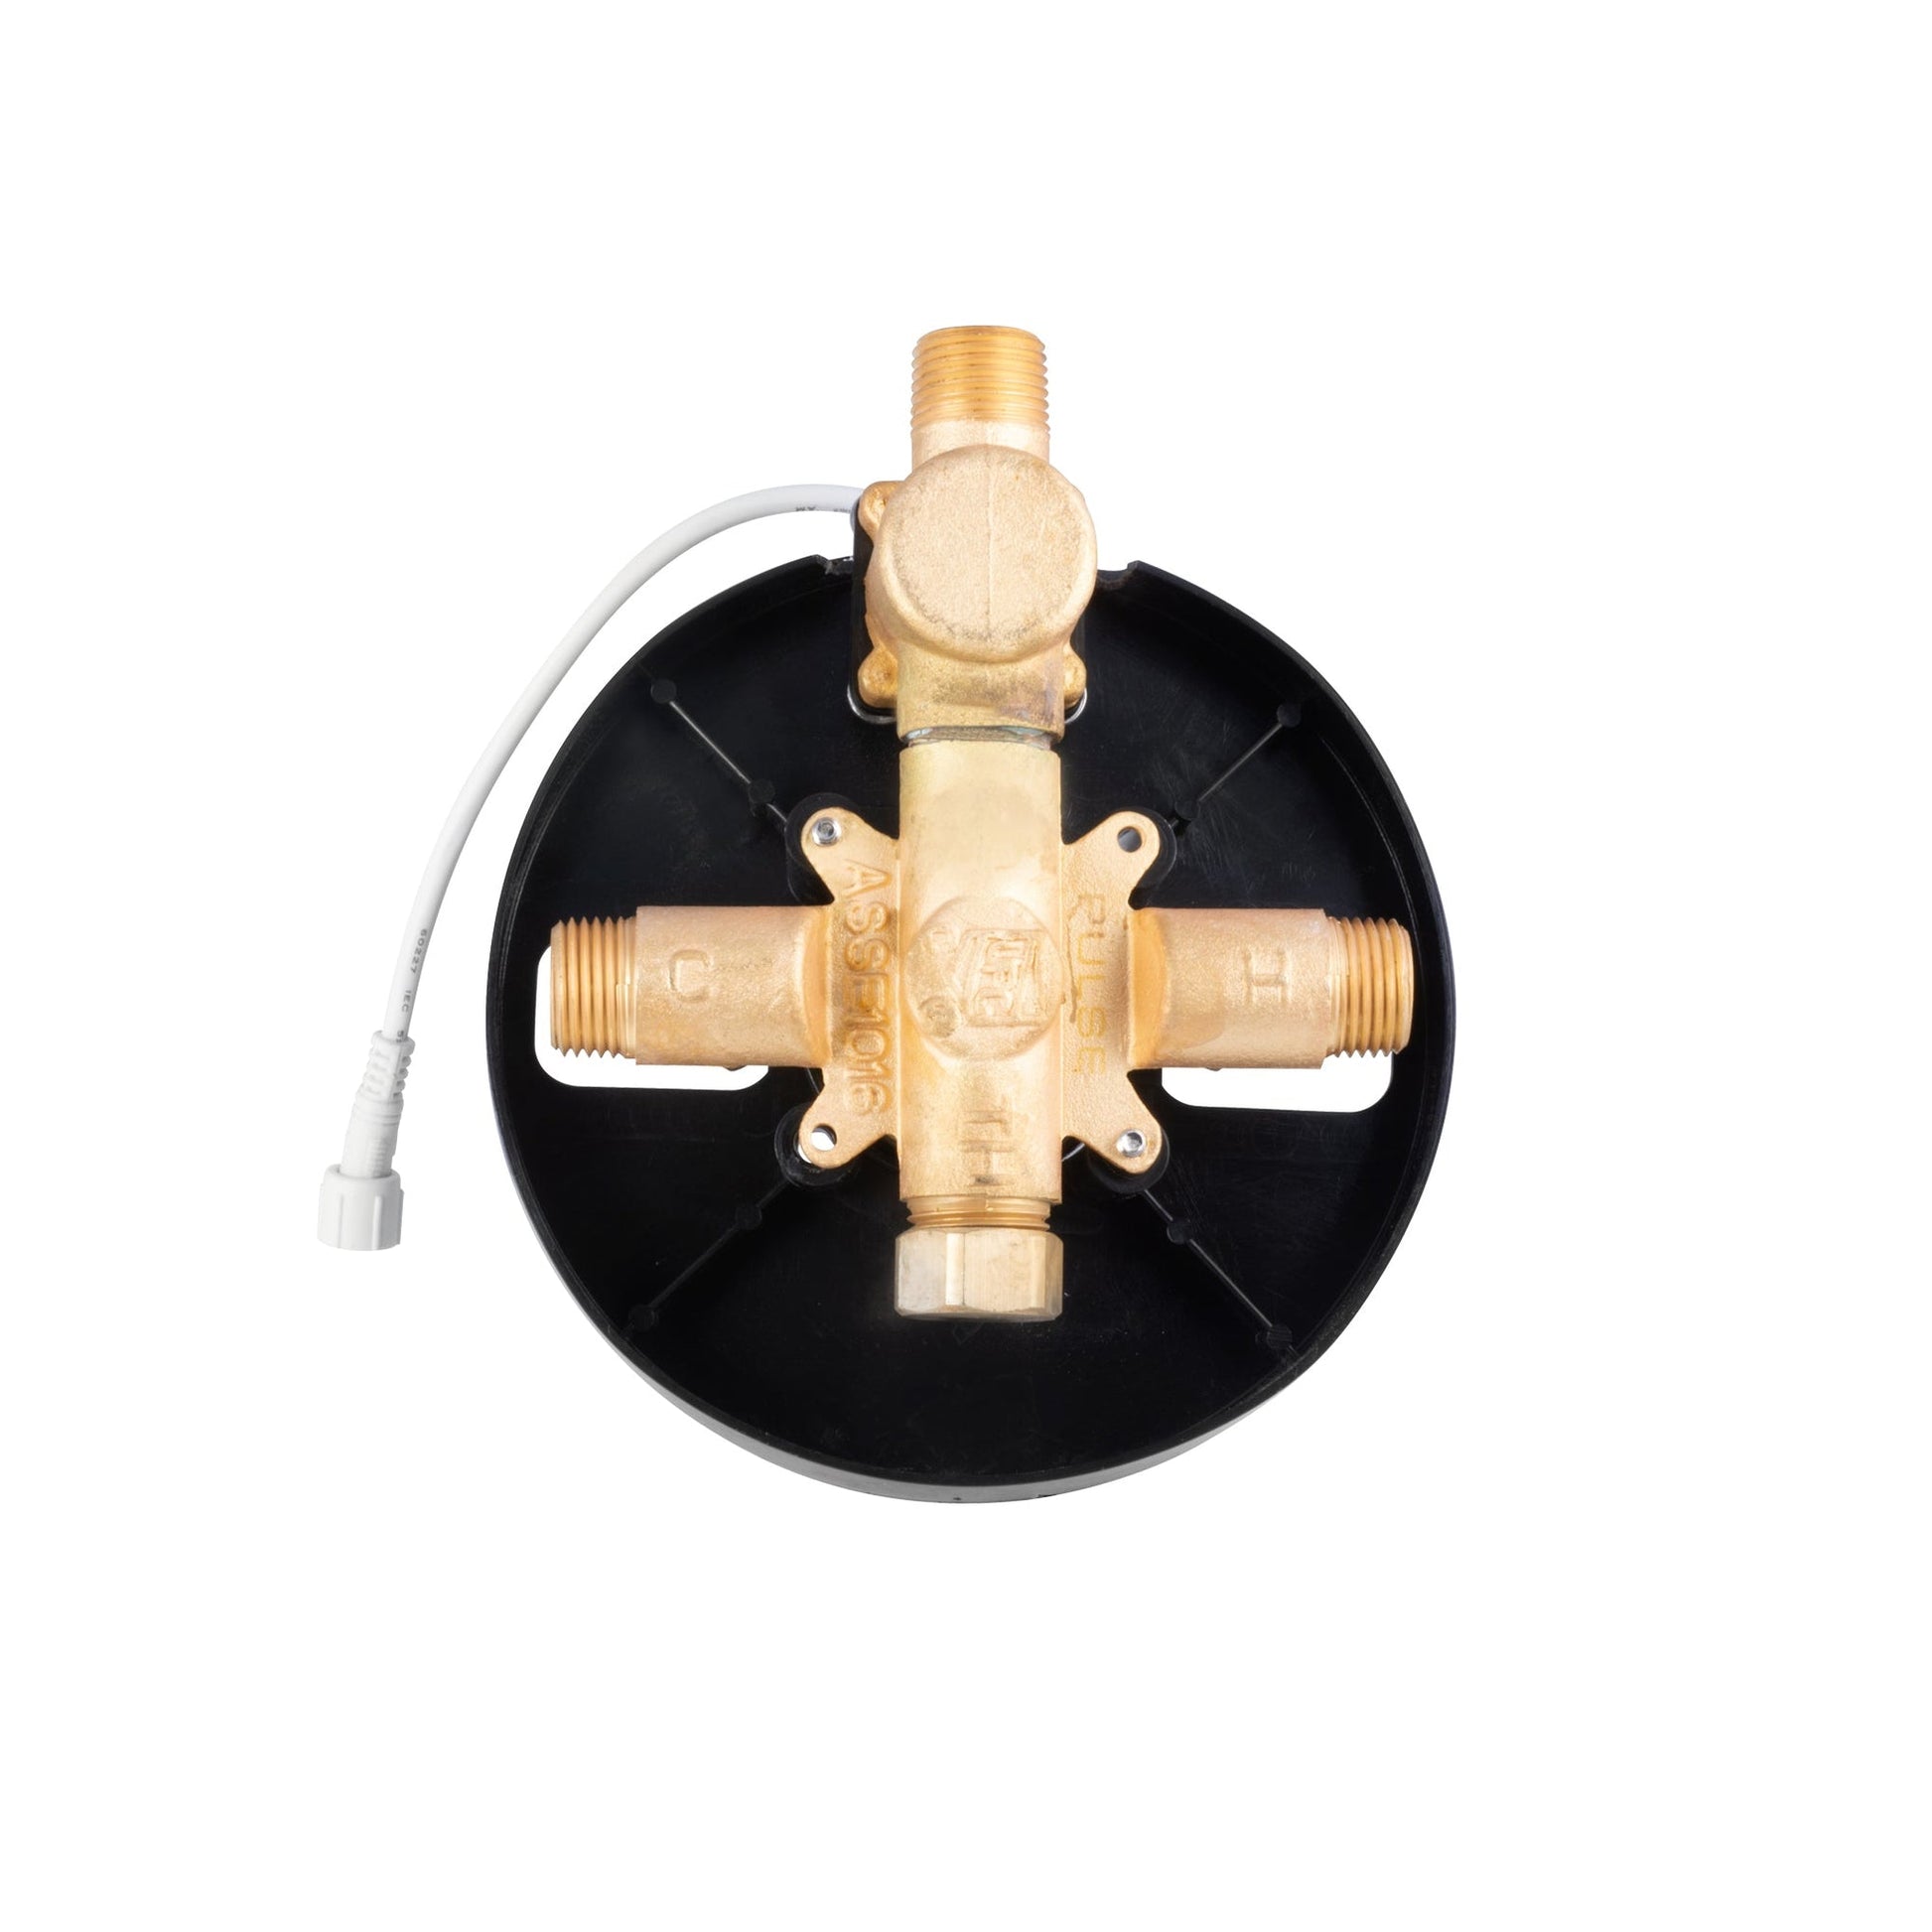 PULSE ShowerSpas Round LED Tru-Temp Pressure Balance 1/2" Rough-In Valve With Oil Rubbed Bronze Trim Kit